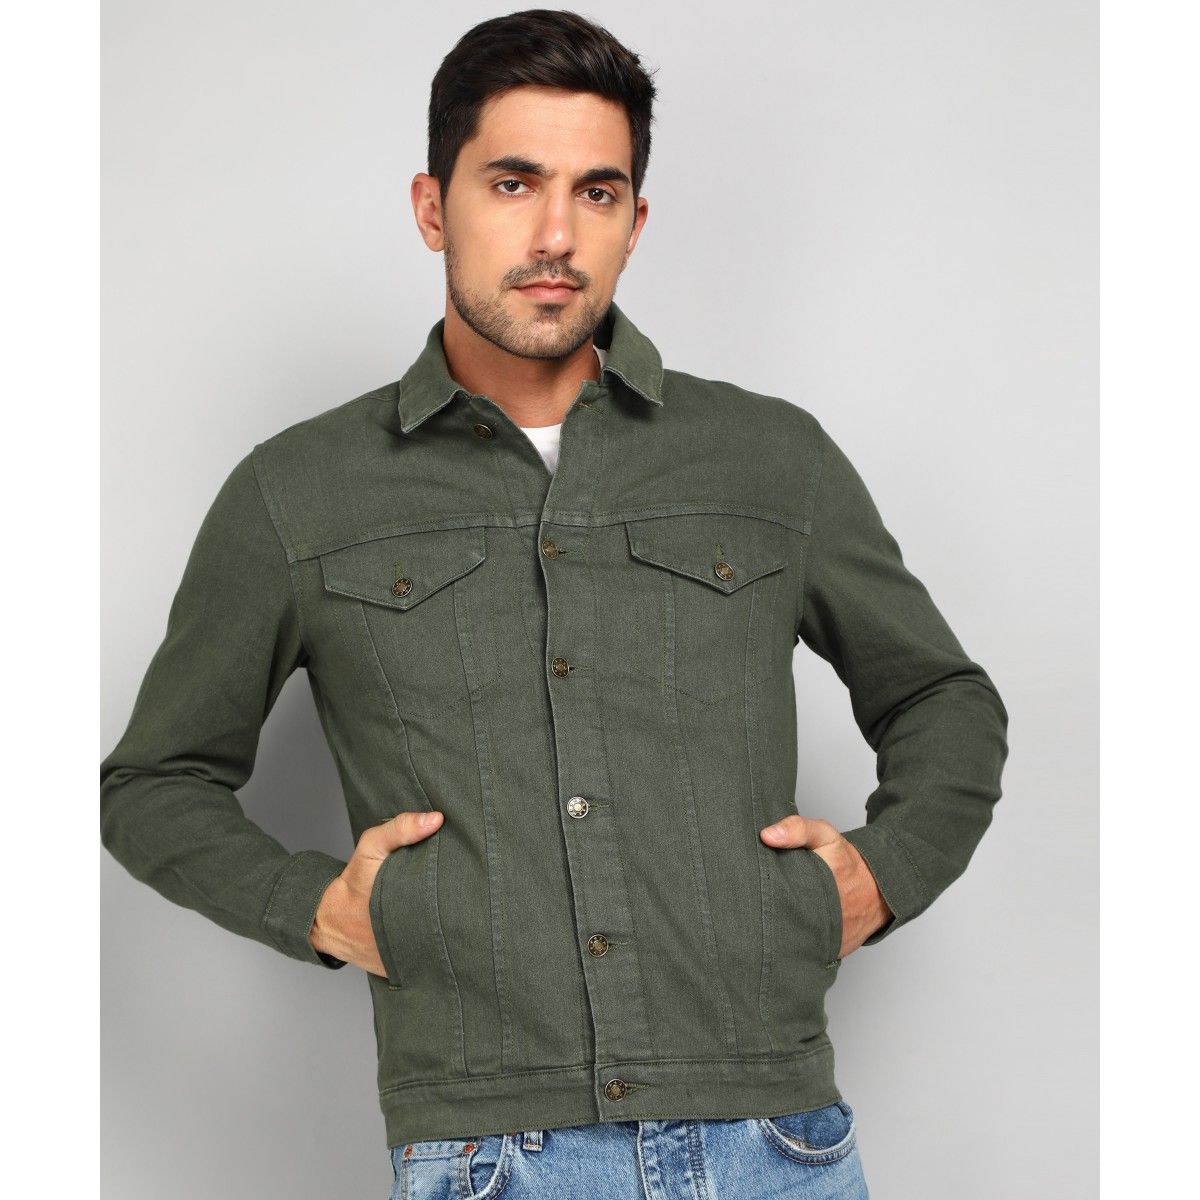 ZARA Men's Jean Jacket Green XL | Olive green denim jacket, Green denim  jacket, Green jacket men